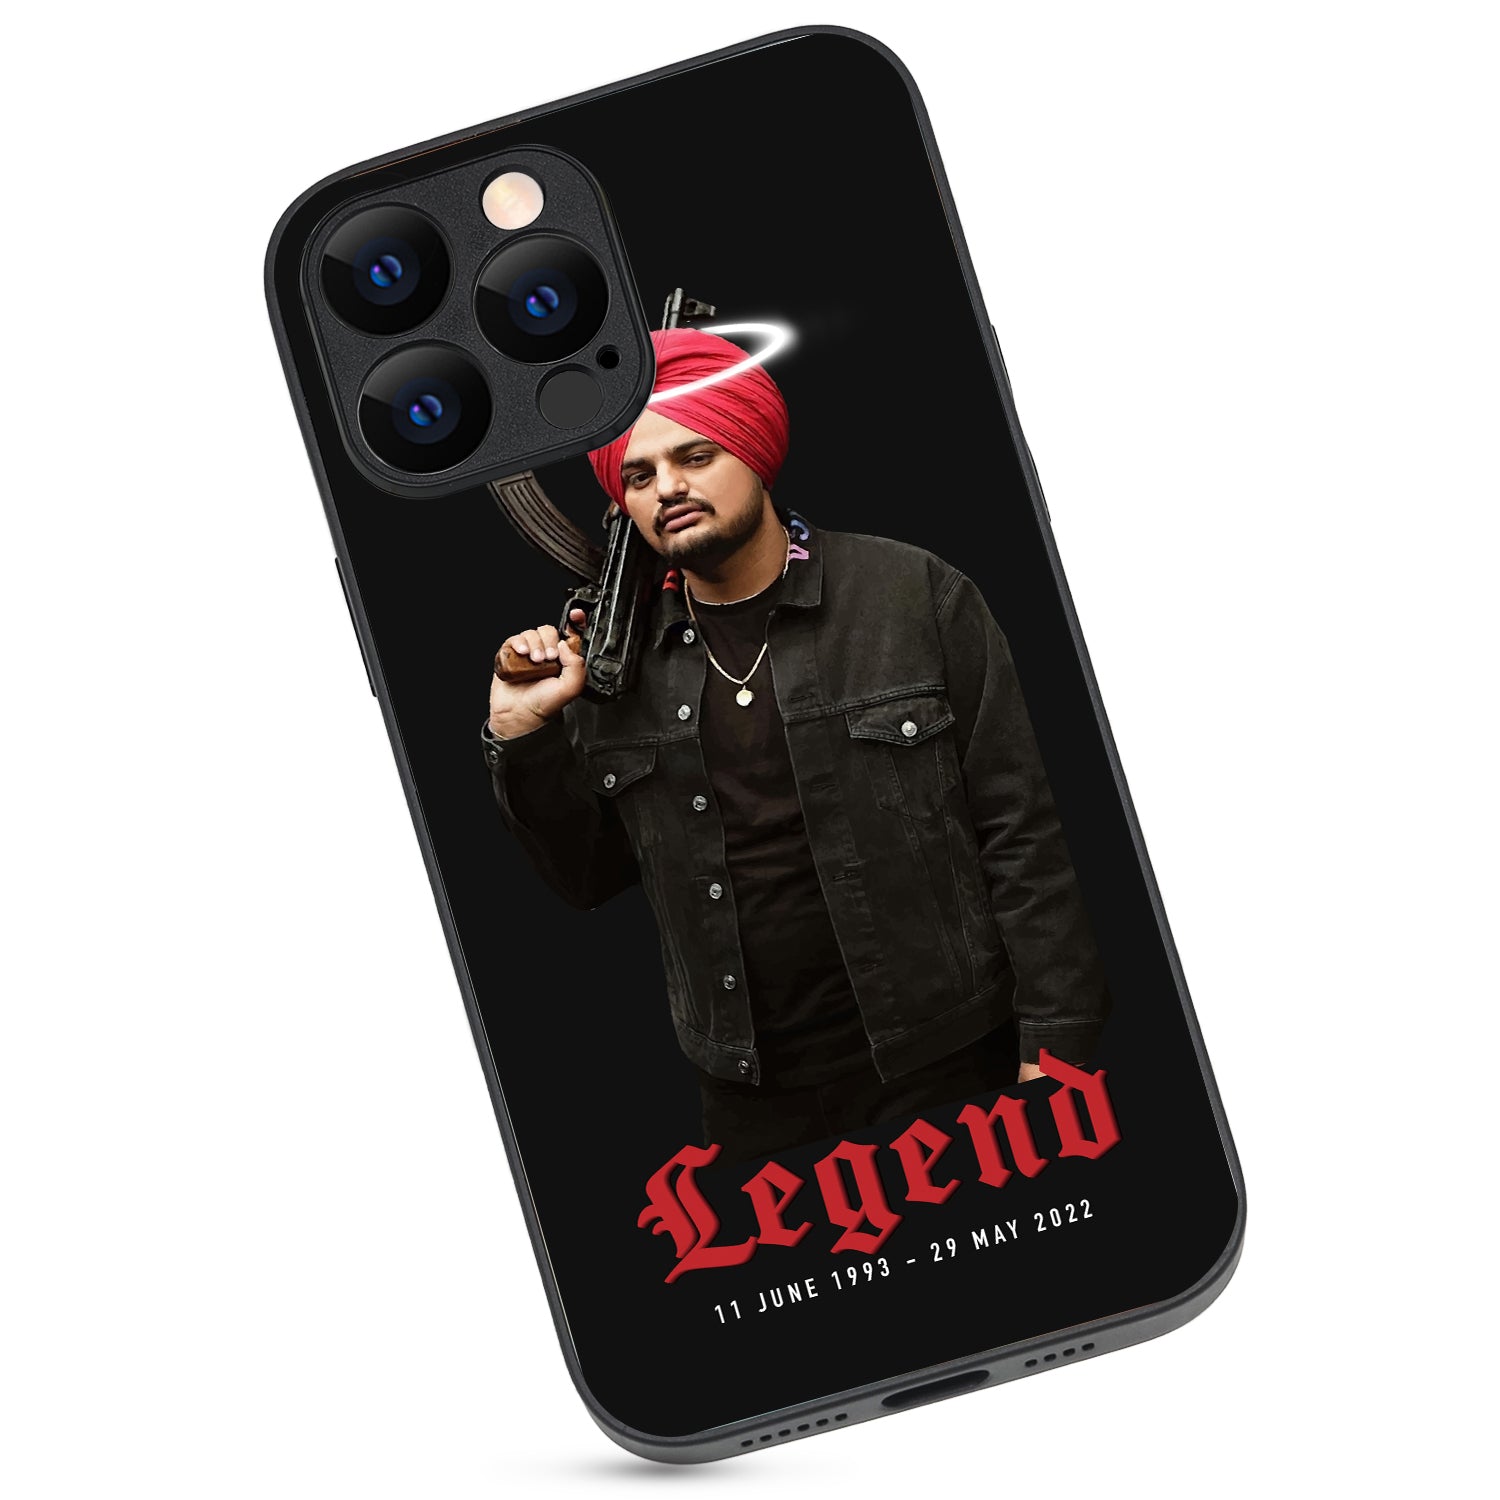 Legend 2.0 Sidhu Moosewala iPhone 13 Pro Max Case